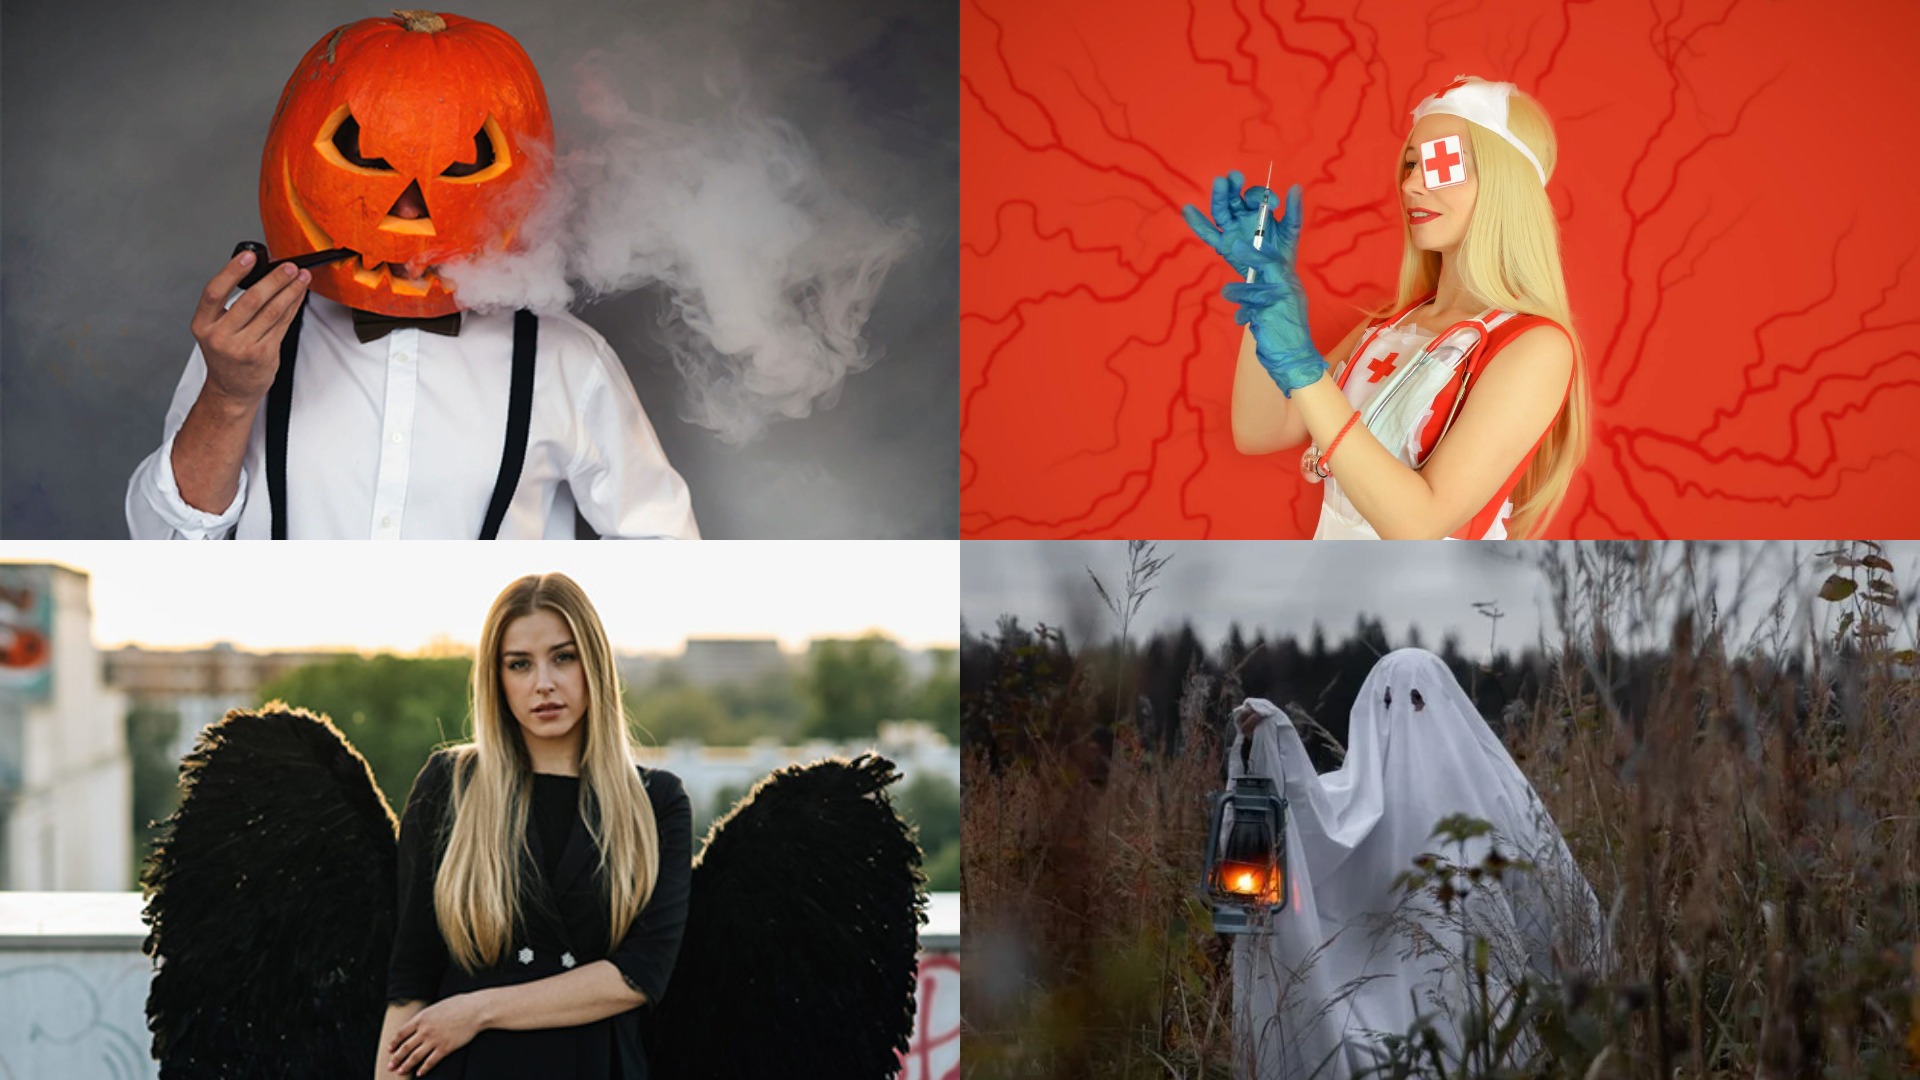 20 Creepy Halloween Costume Ideas